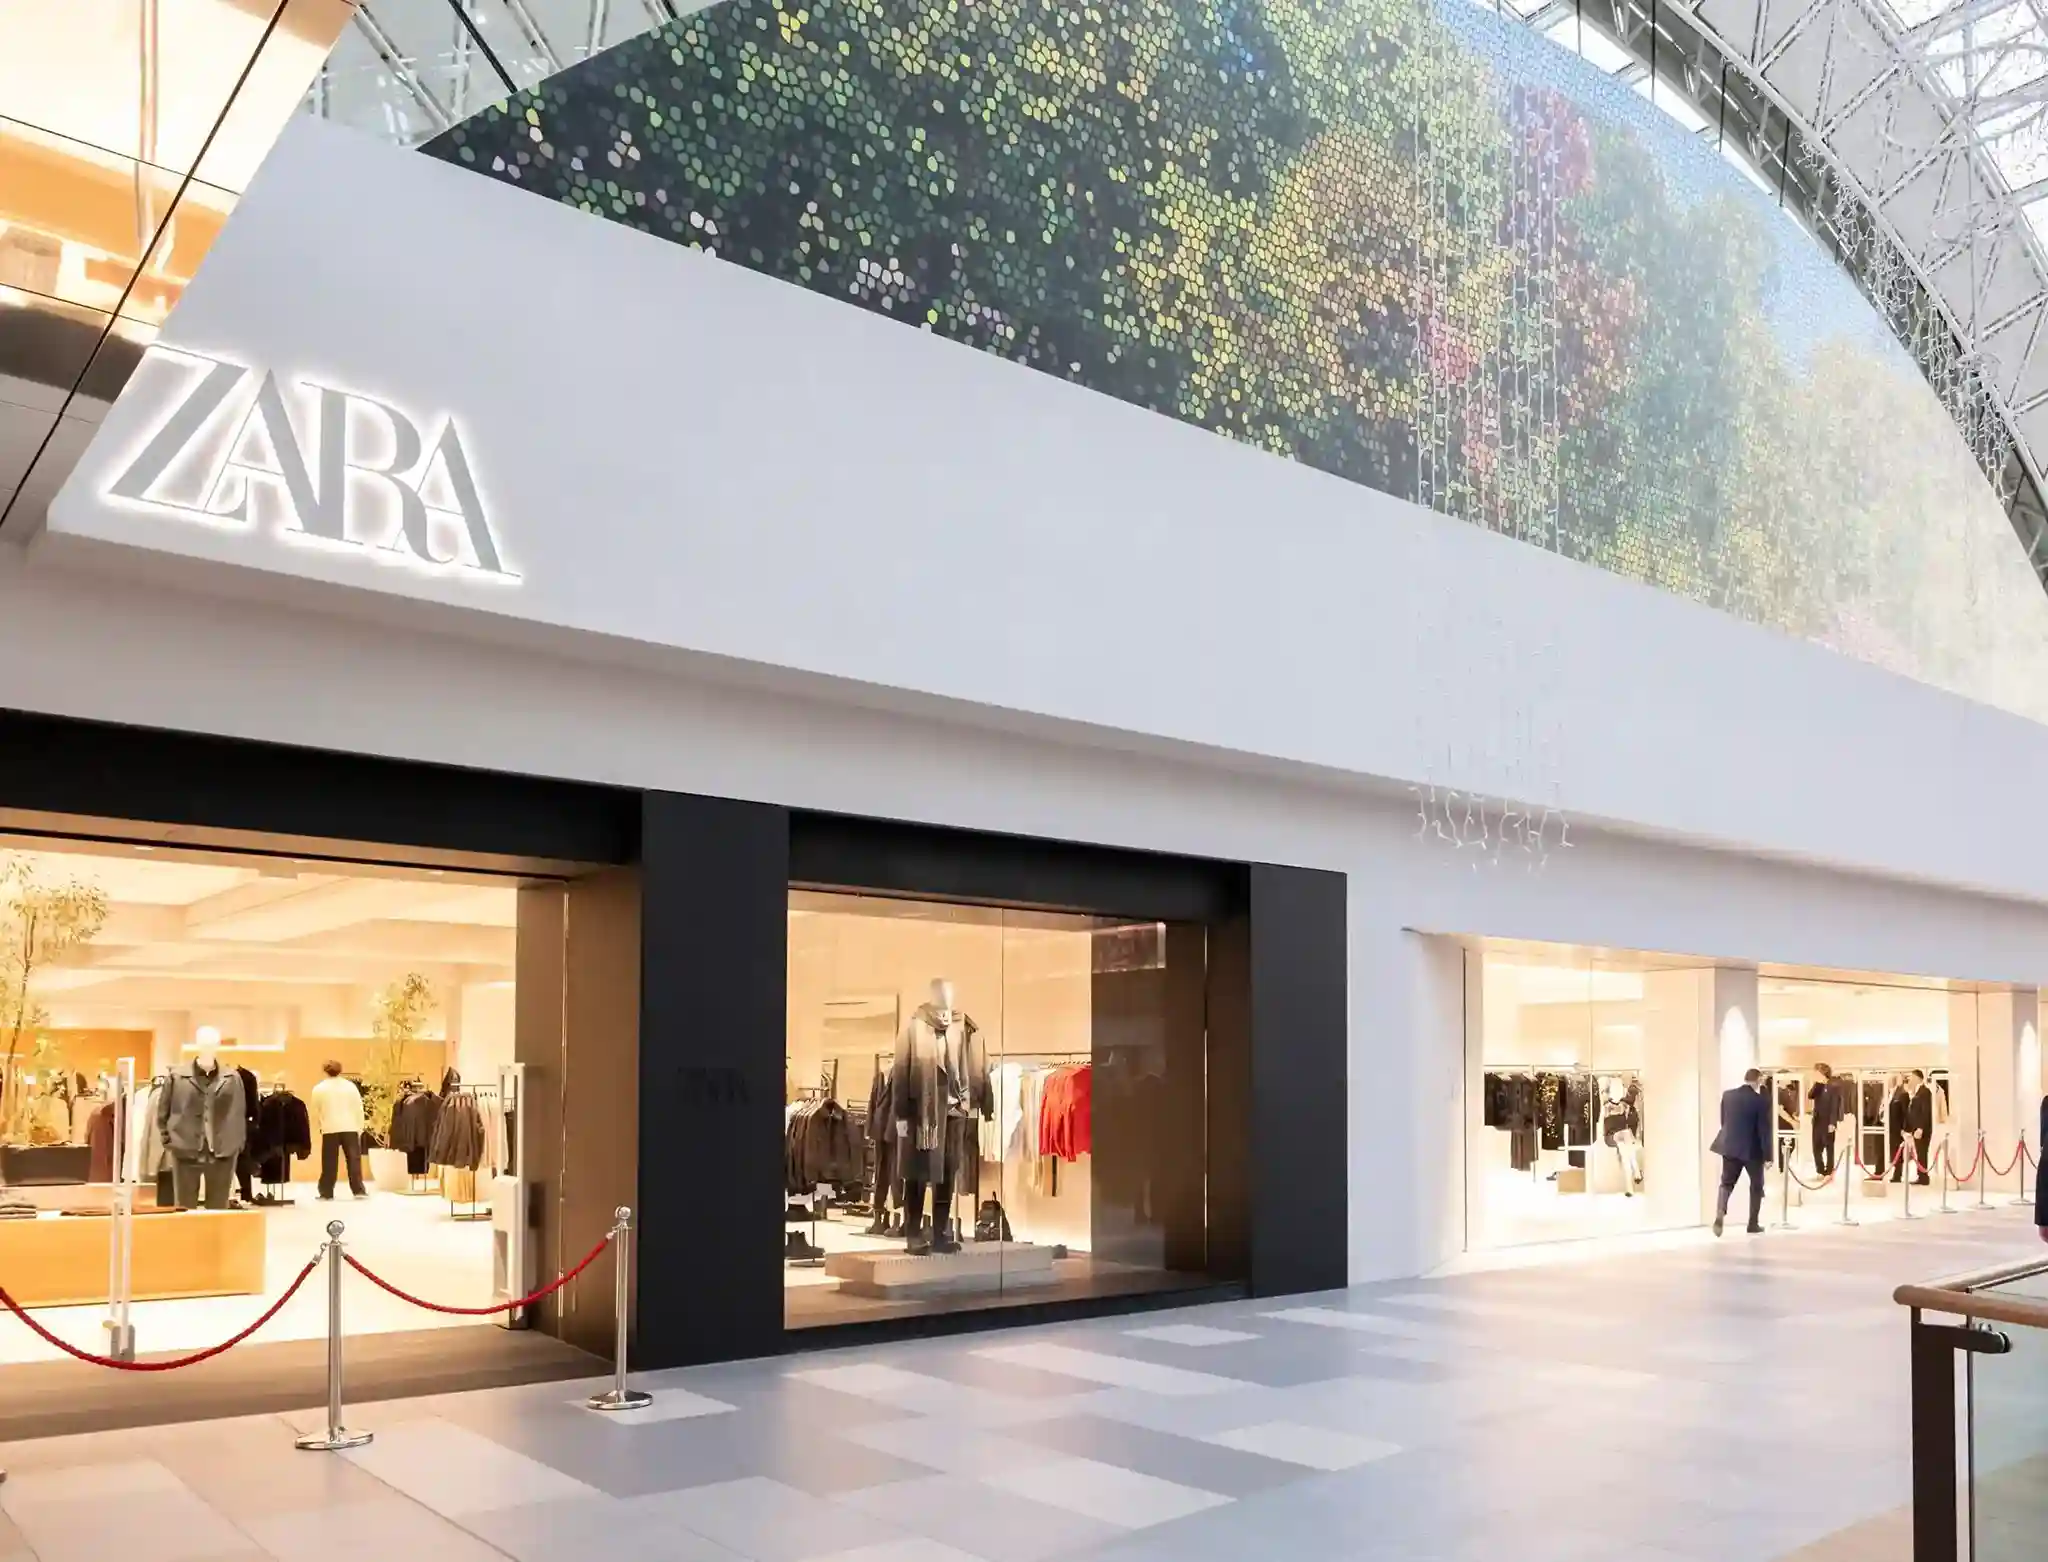 Zara's Store Expansion in Dublin